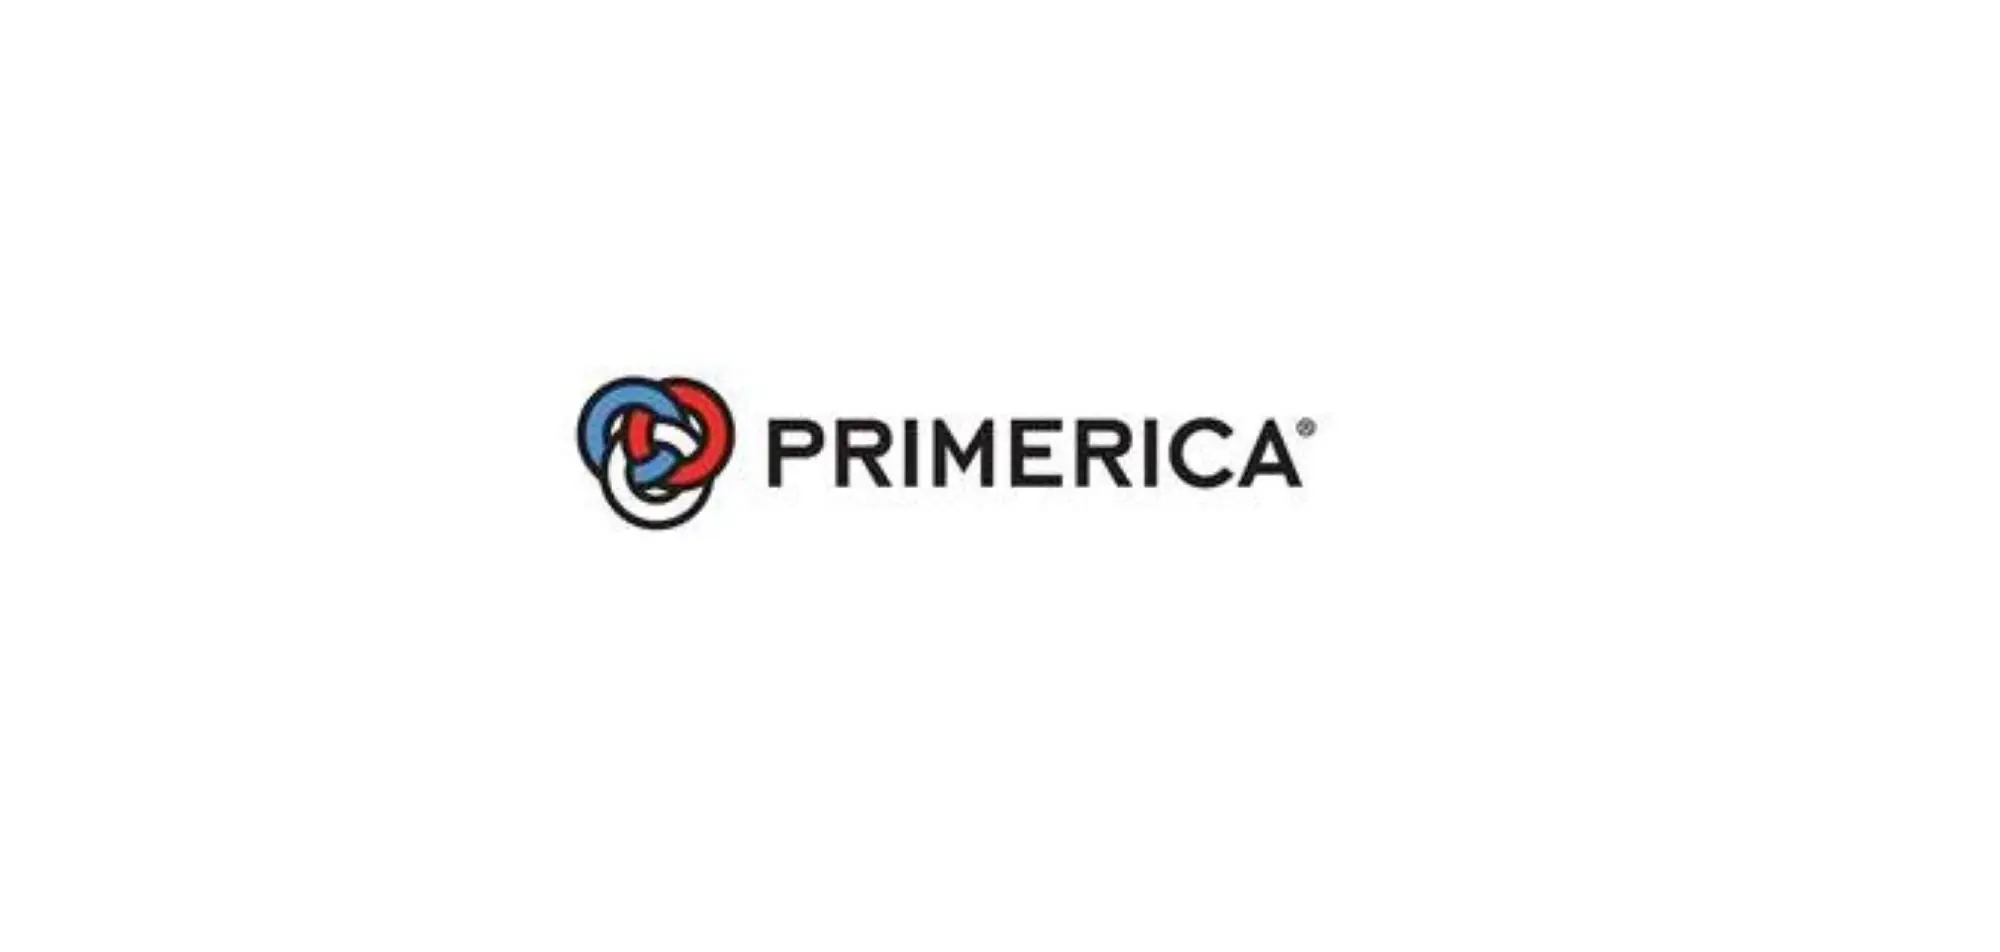 Primerica Life Insurance Review For 2020 (AKA Prime America)